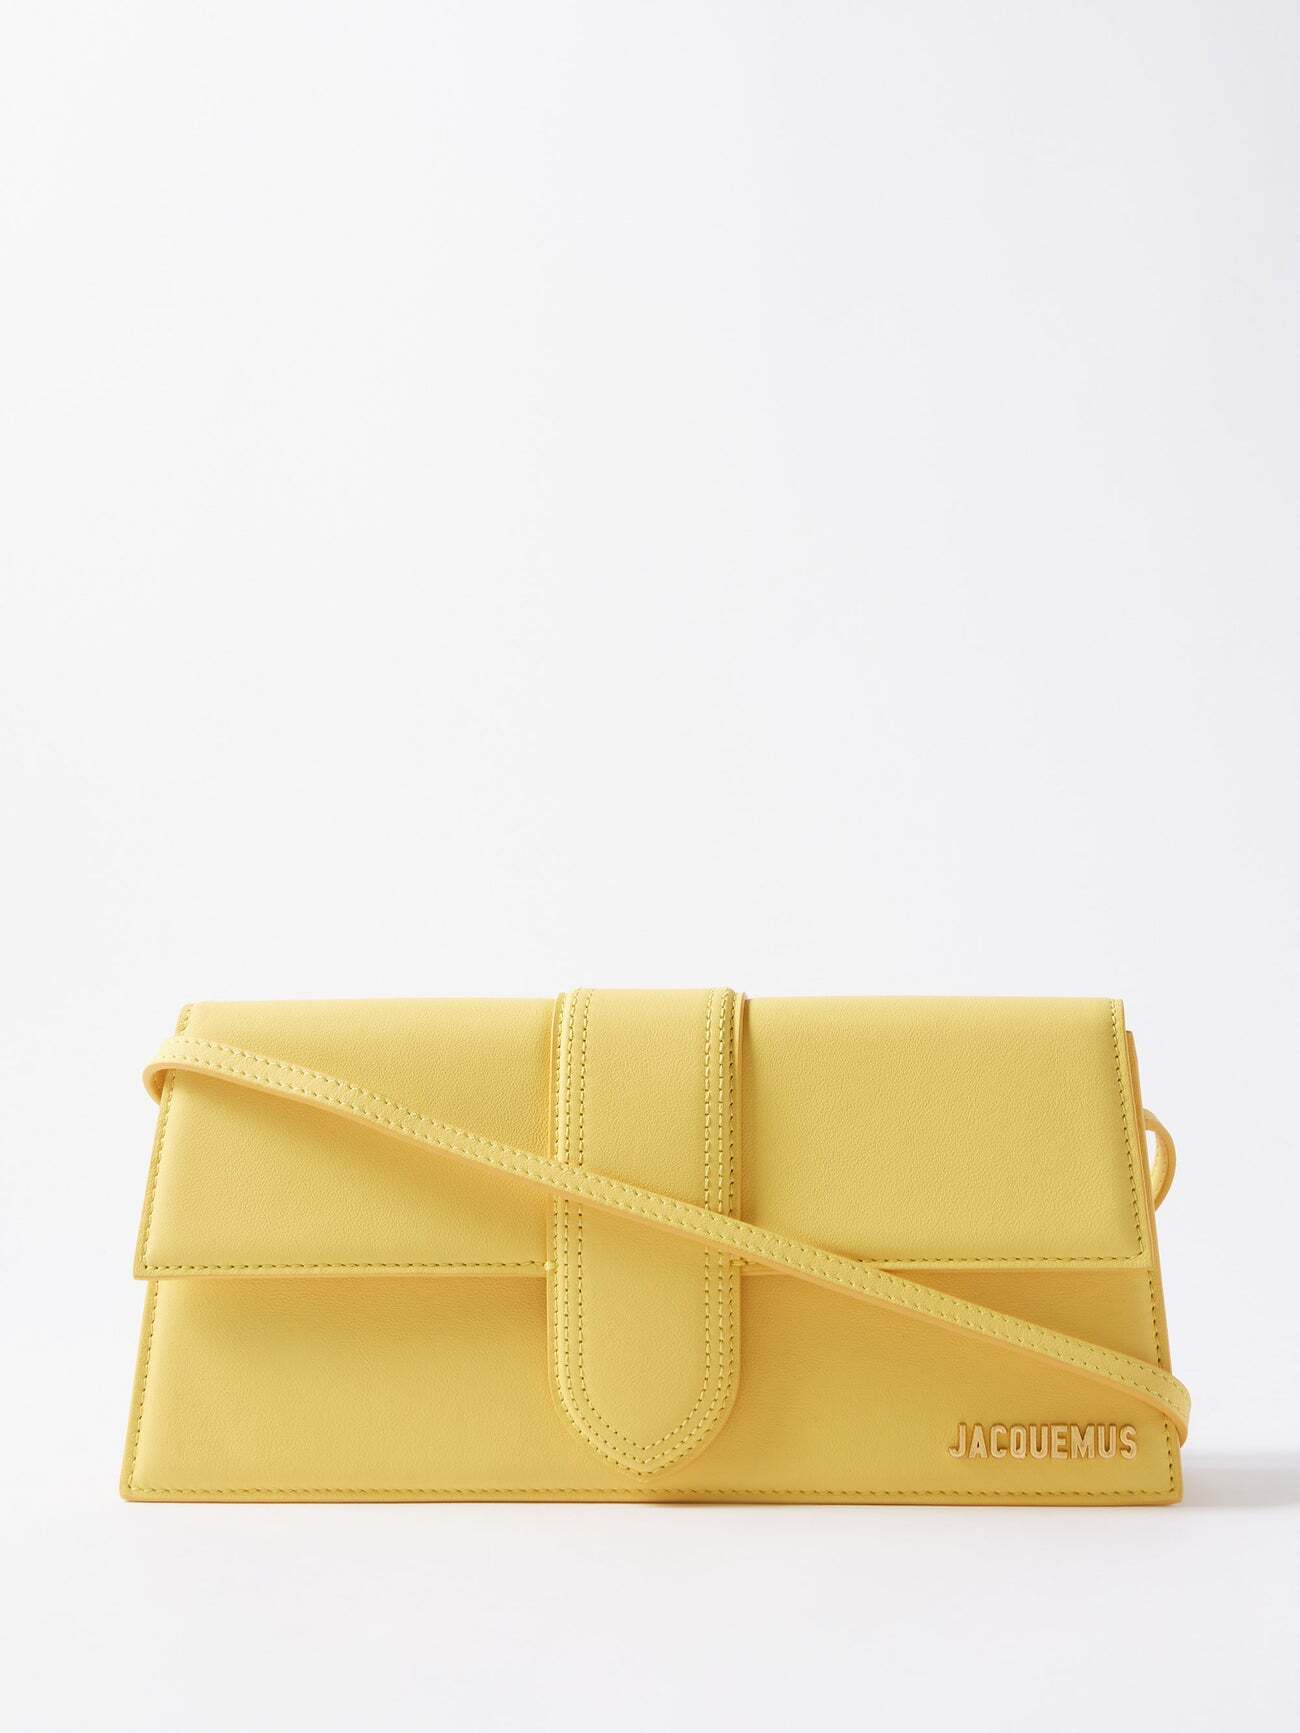 Jacquemus - Bambino Leather Shoulder Bag - Womens - Yellow